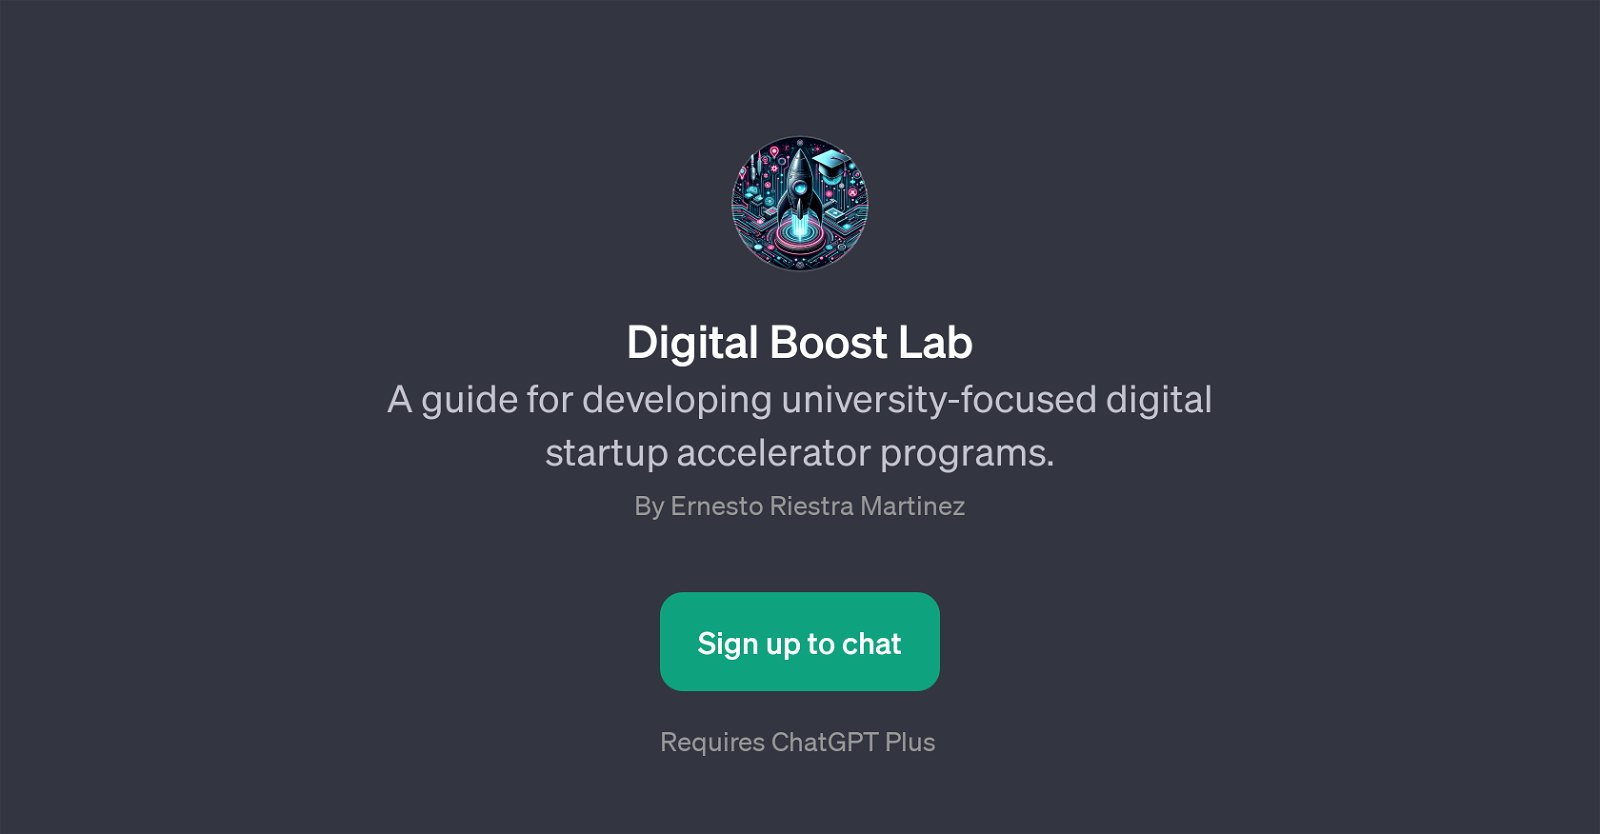 Digital Boost Lab website